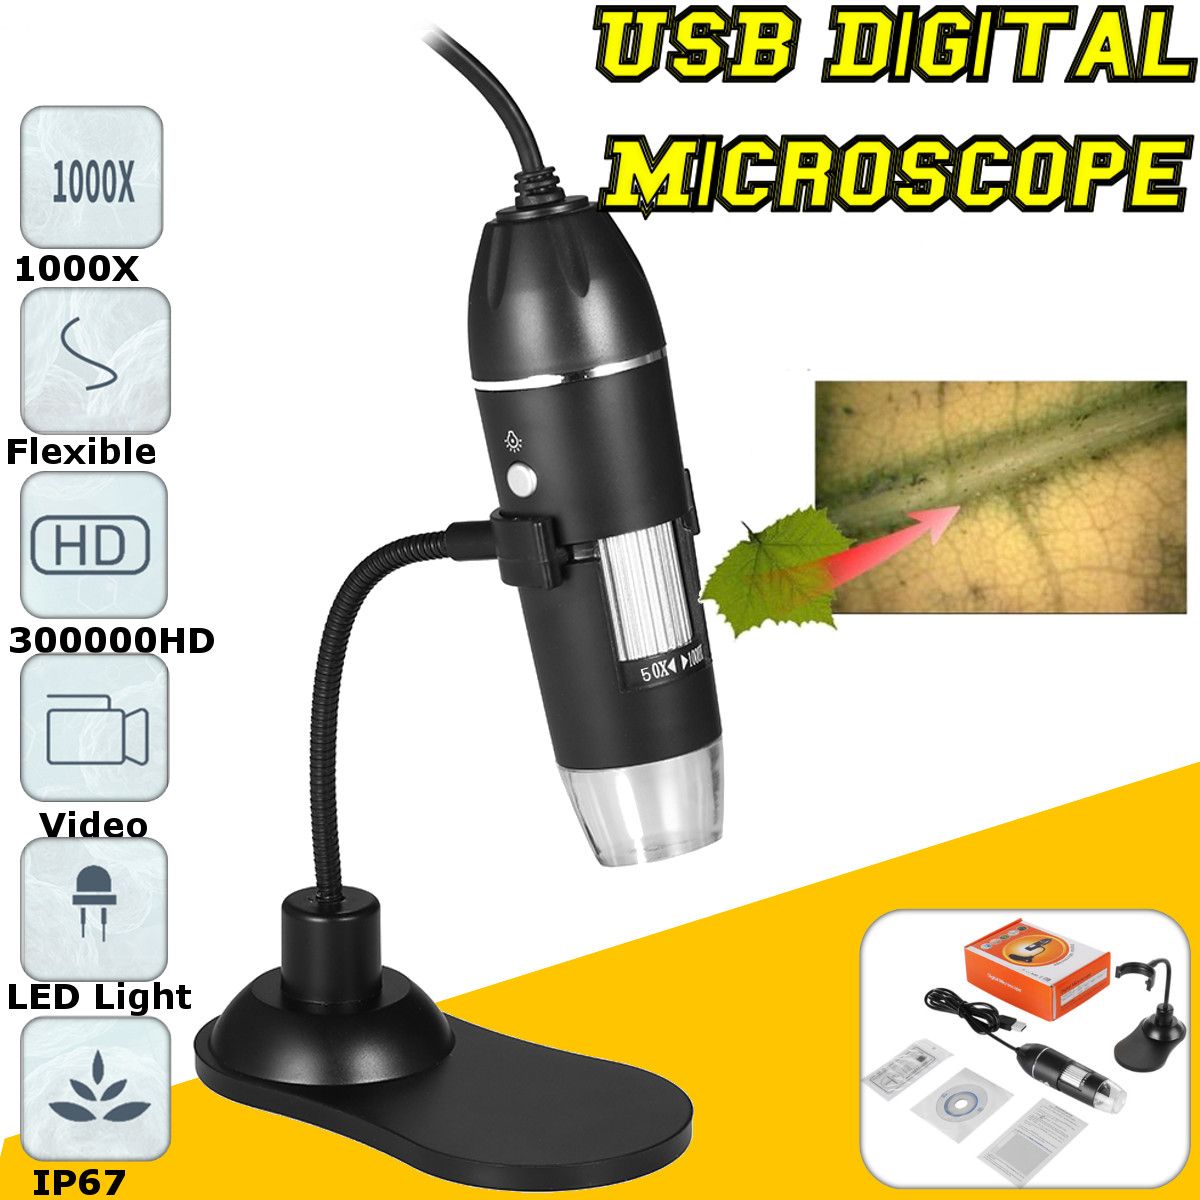 USB-Multipurpose-1000X-Magnification-Digital-Zoom-Microscope-03MP-Camera-Stand-1571296